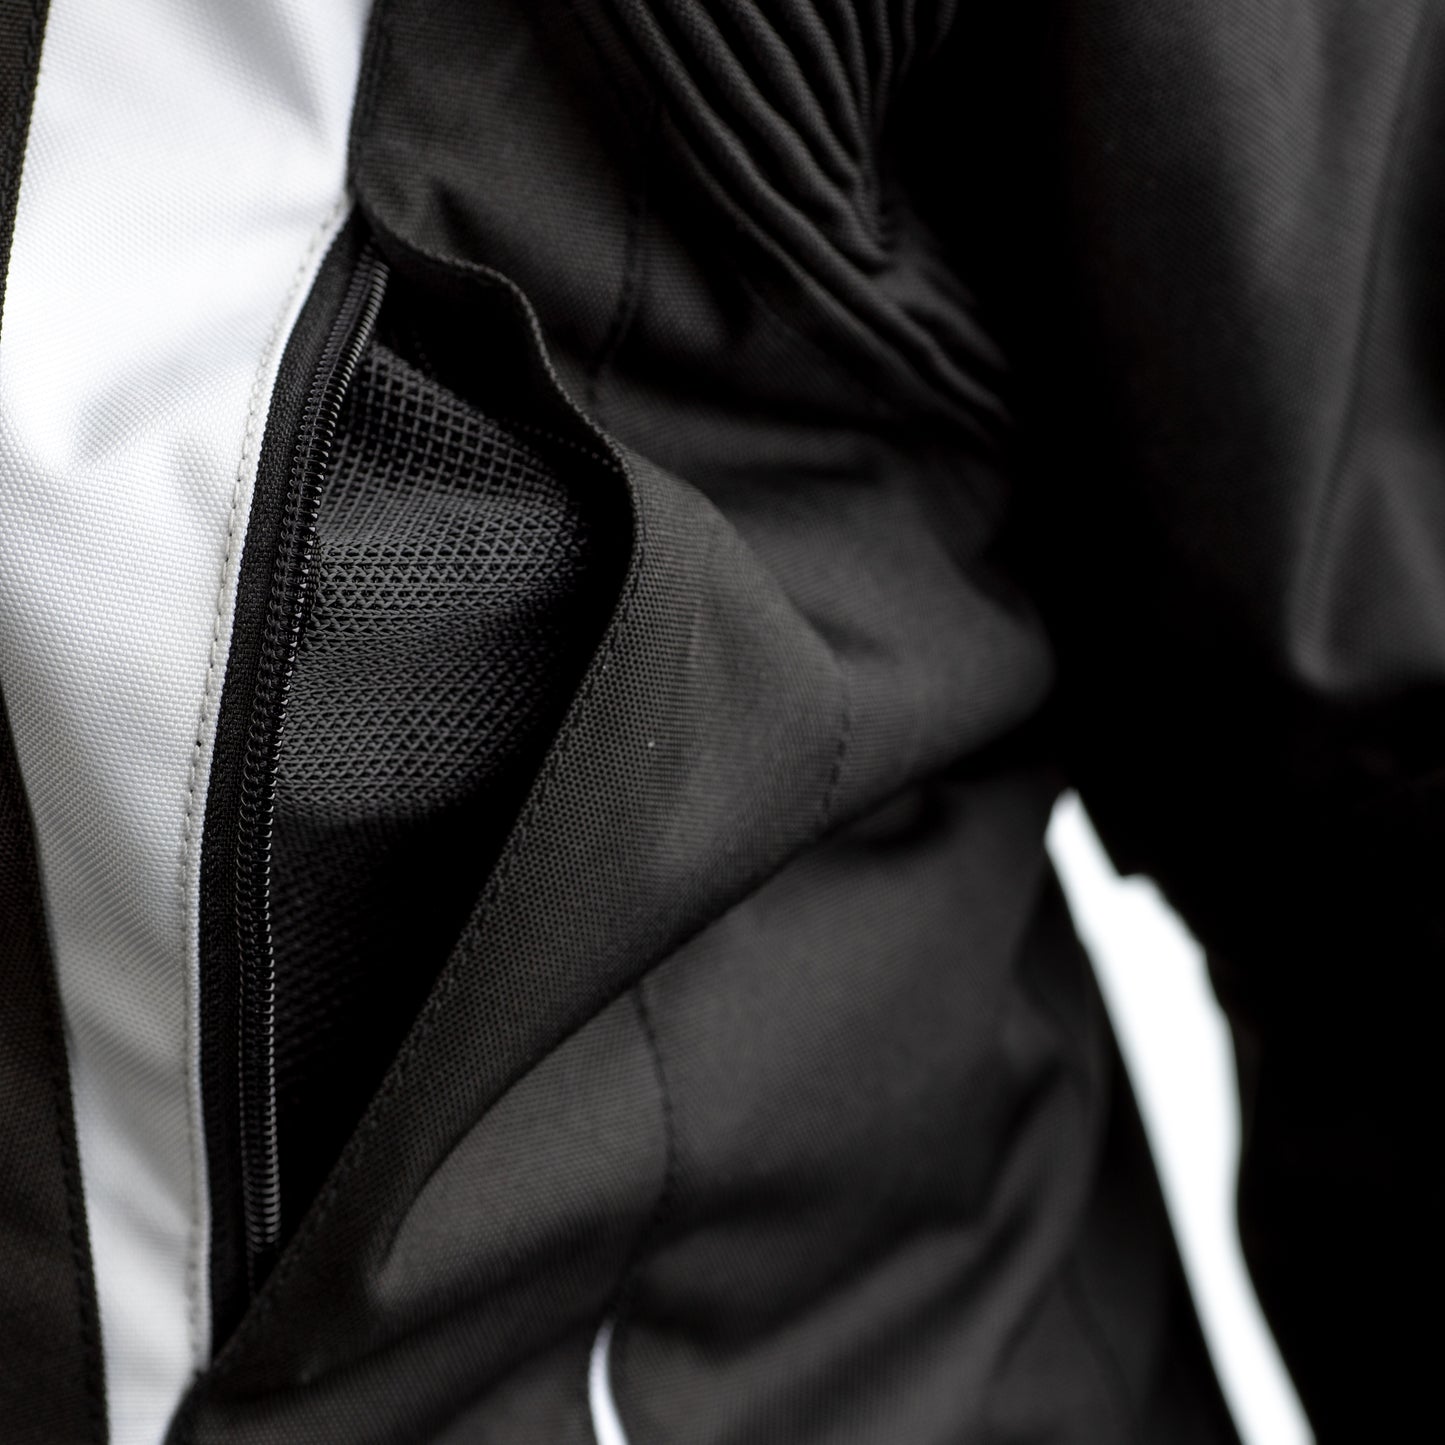 RST Tractech Evo 4 CE Mens Textile Jacket - Black / White (2365)